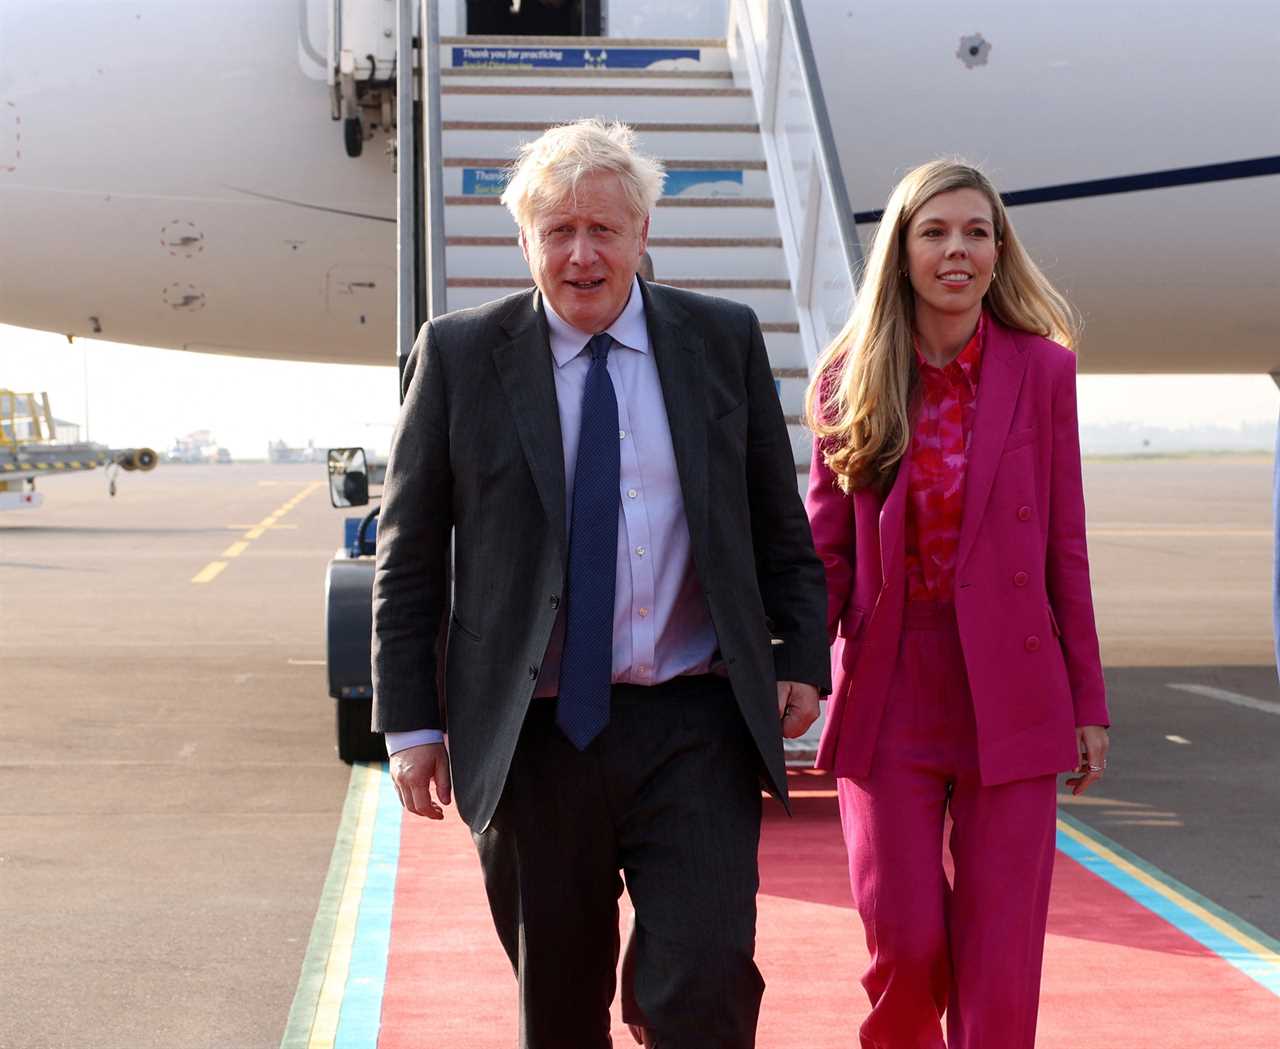 Boris Johnson will tell Prince Charles to ‘keep an open mind’ over Rwanda migrant plan